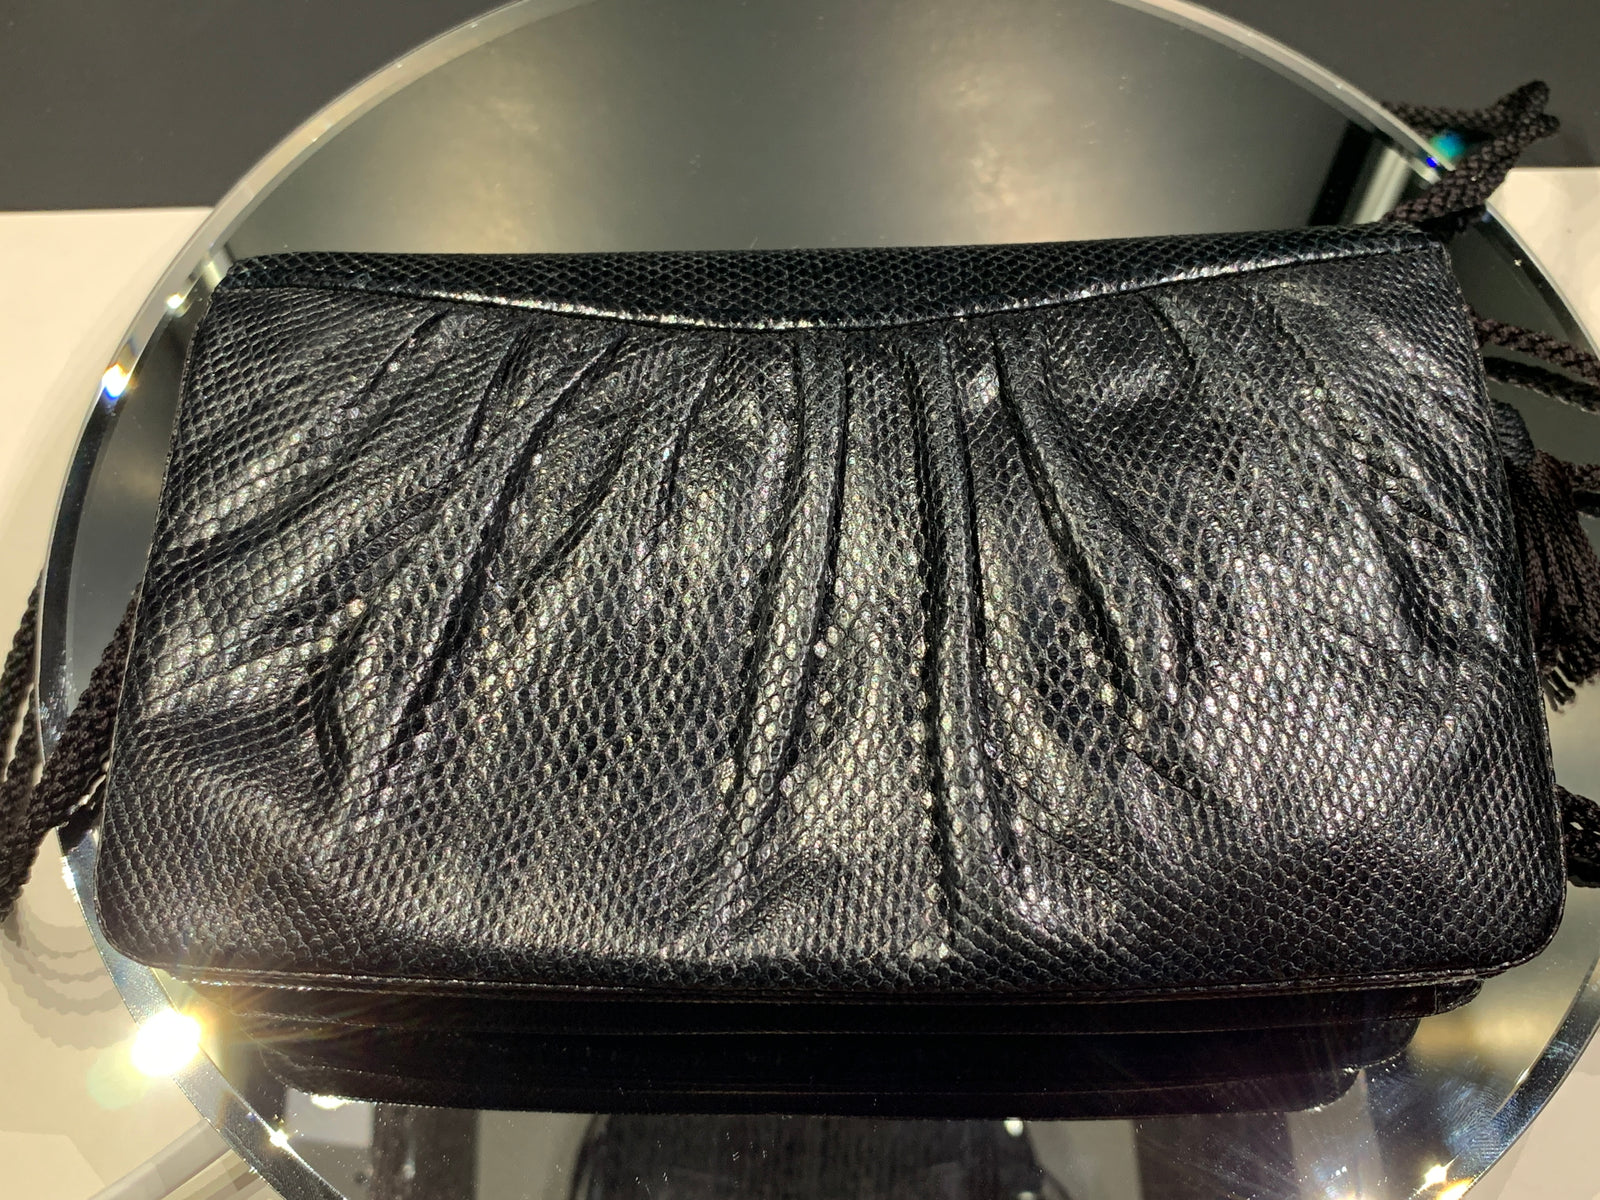 Beyoncé Wore an Area Denim Embellished Ensemble with a Louis Vuitton Handbag  – Fashion Bomb Daily